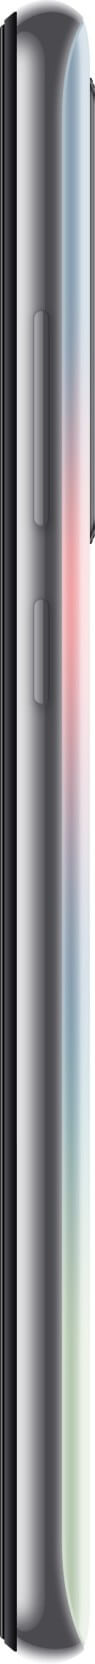 Xiaomi Redmi Note 8 Pro (128 GB, 6 GB RAM), 20MP Front Camera, 4500 mAh Li-polymer Battery - Pearl White